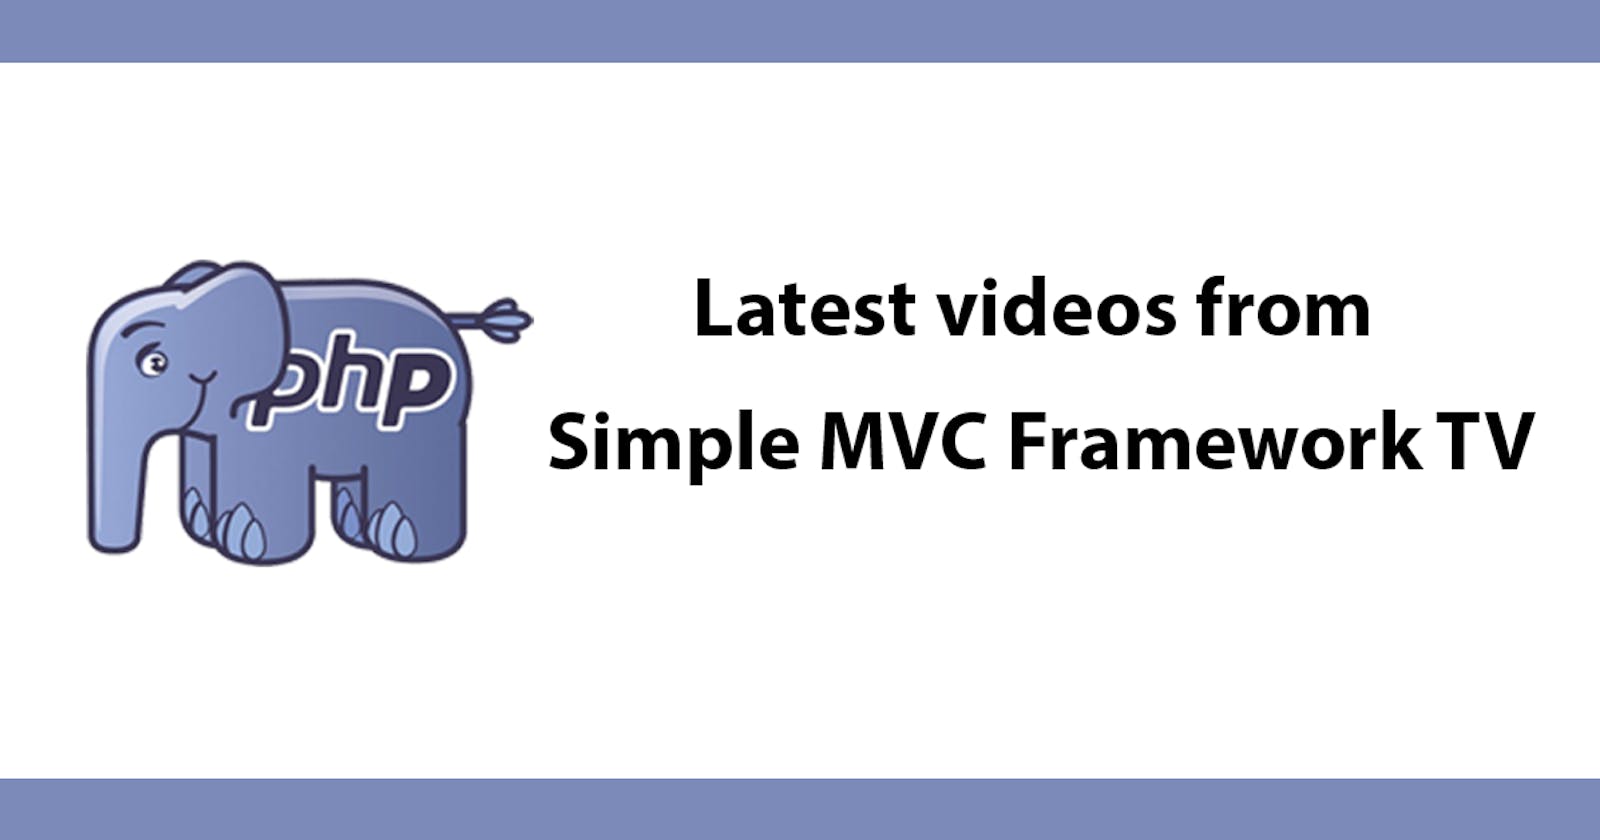 Latest videos from Simple MVC Framework TV